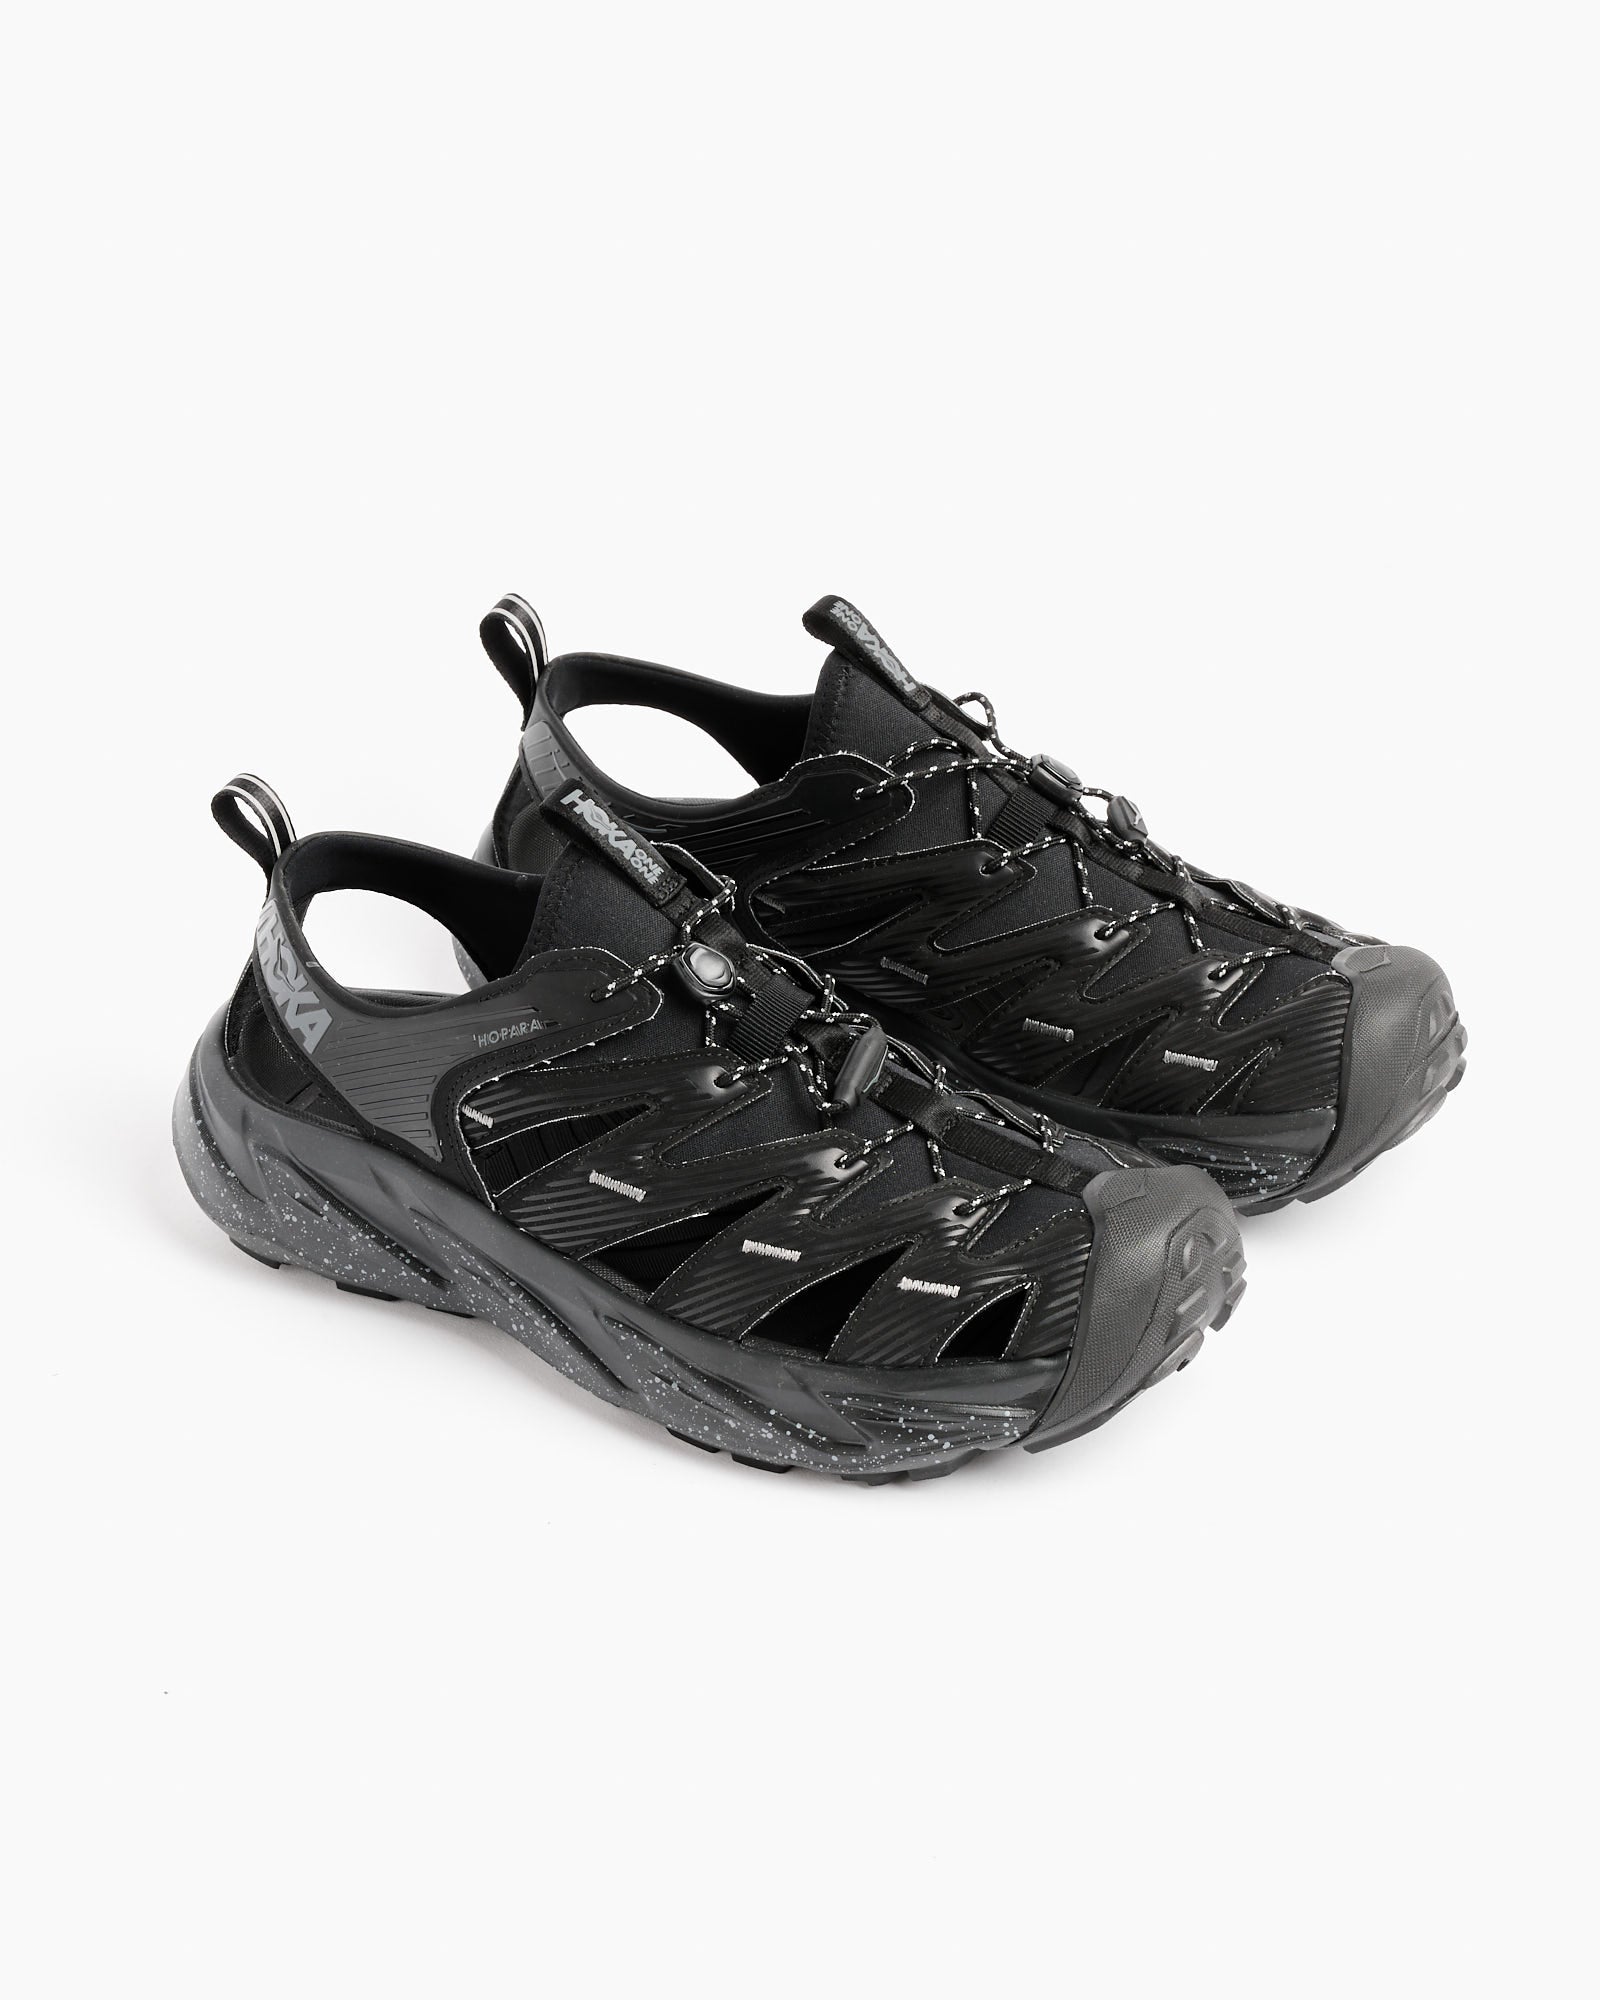 U Hopara Shoes in Black/Castlerock